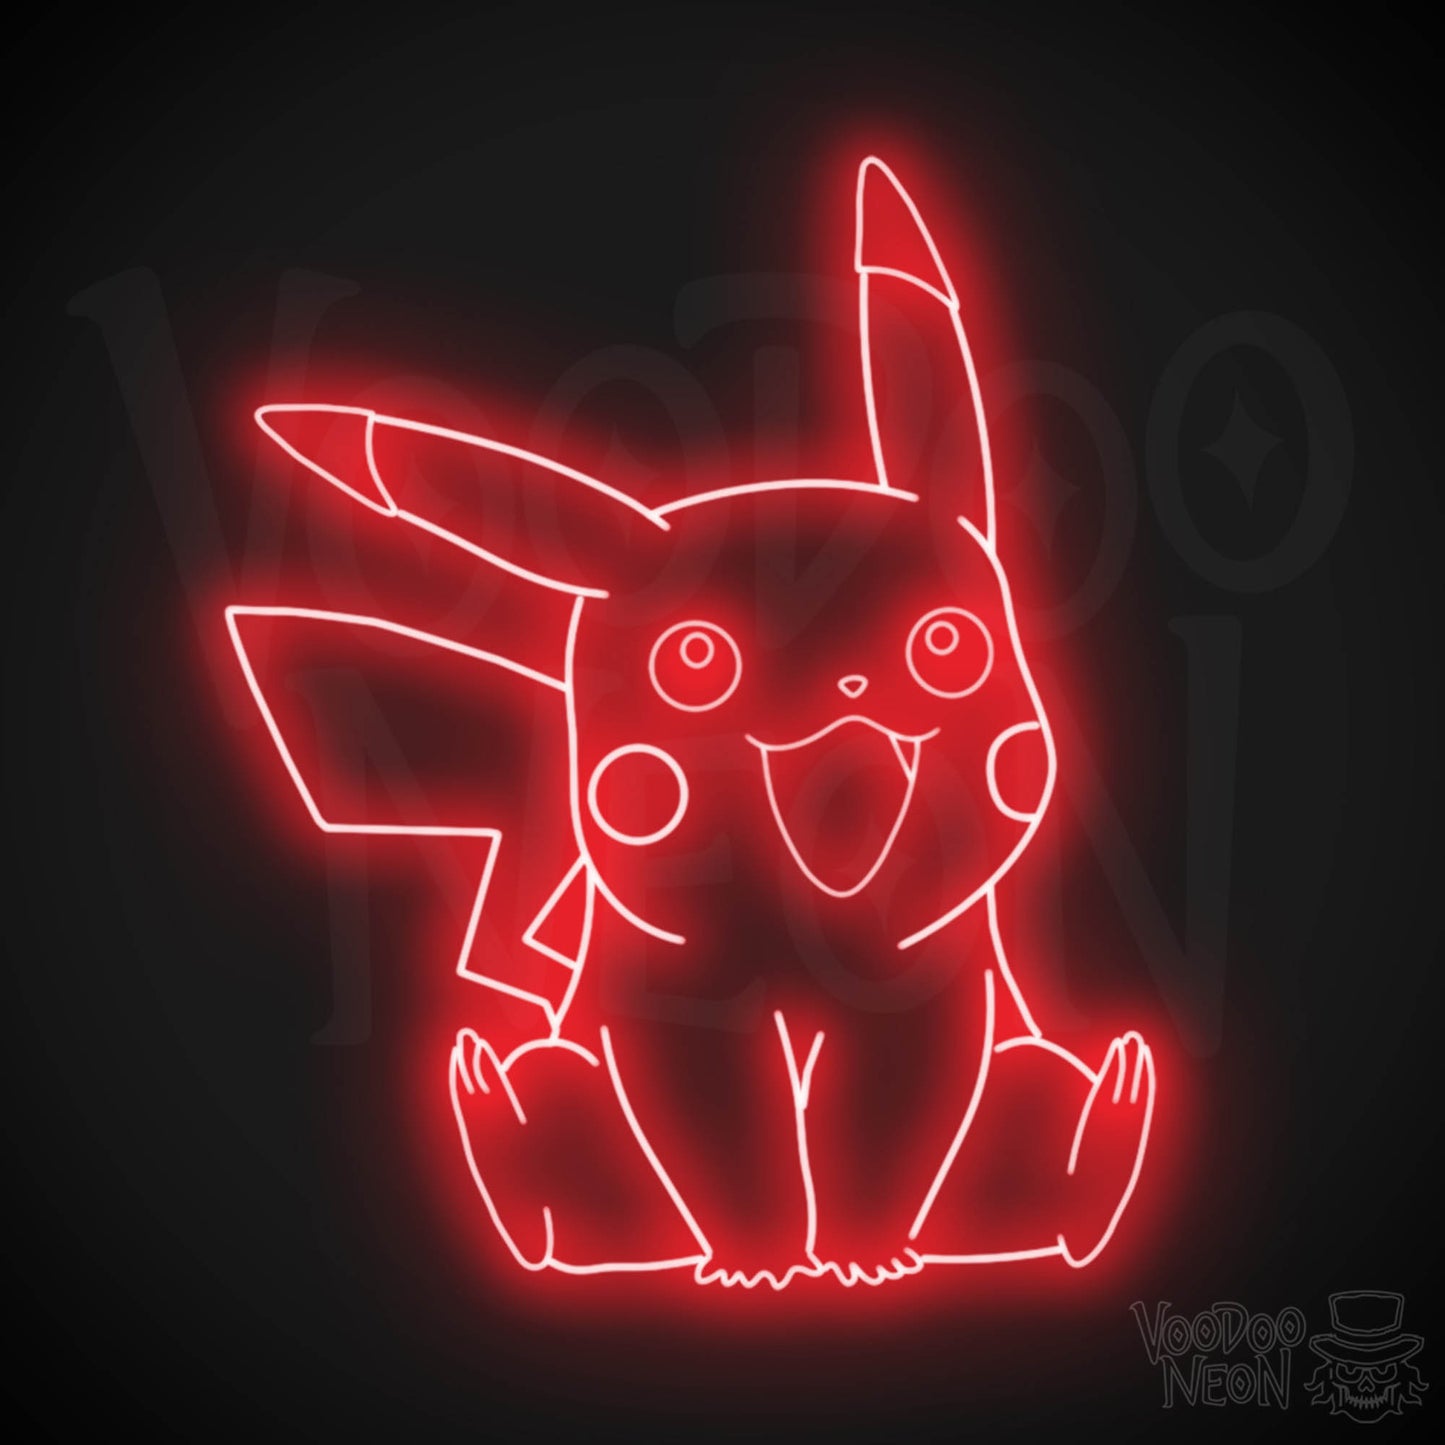 Pikachu Neon Sign - Pikachu Art - Pikachu Neon Wall Art - LED Sign - Color Red